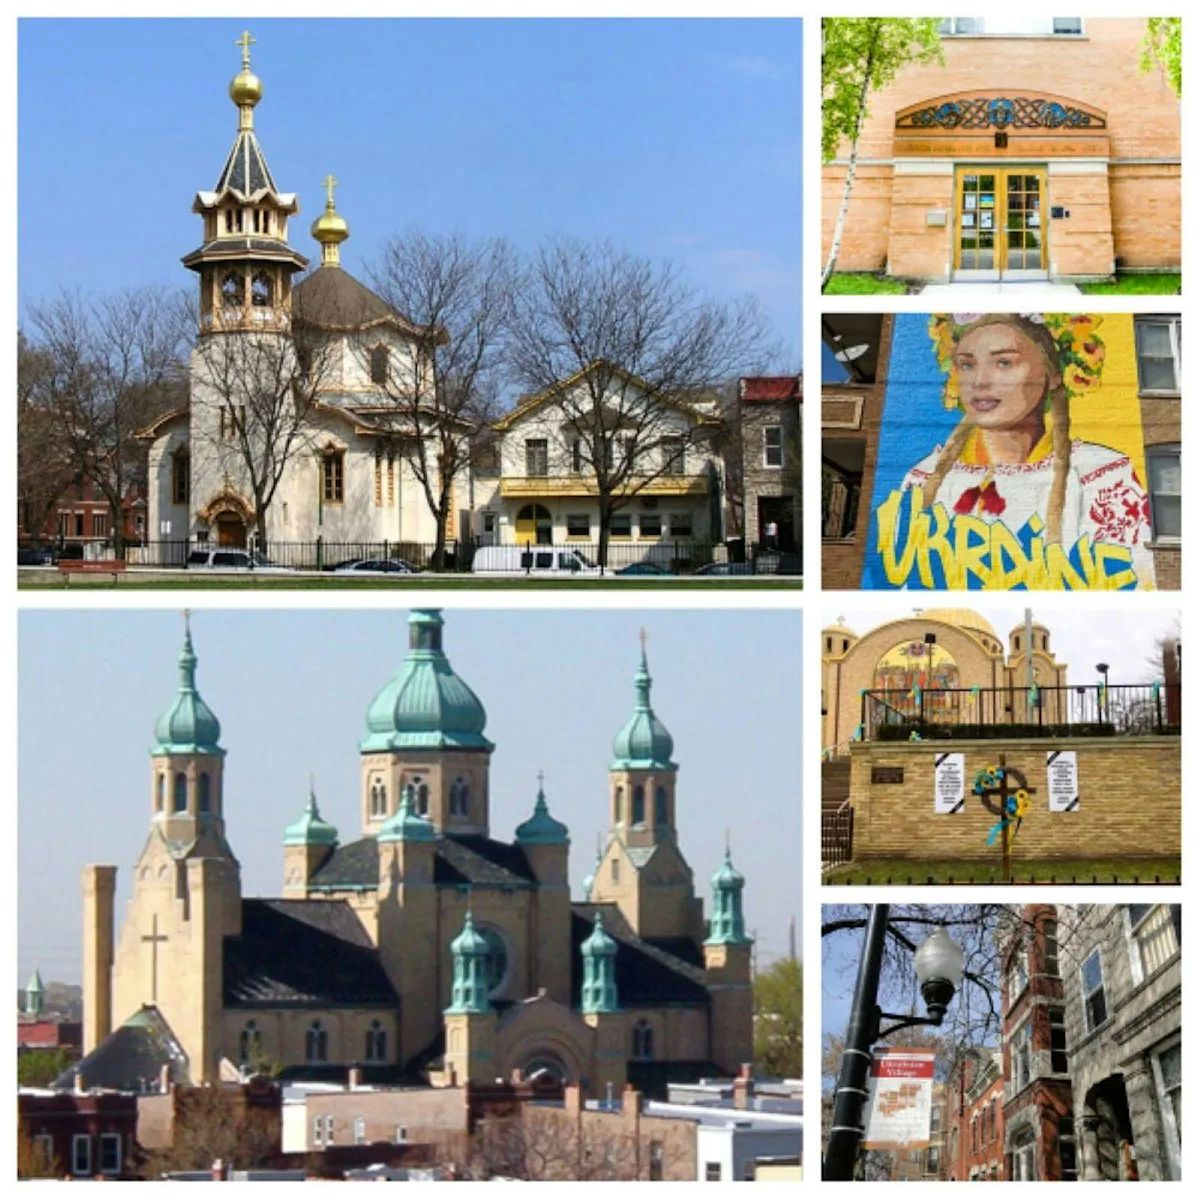 Historic Ukrainian Village Walking Tour (Includes Landmarked Churches)